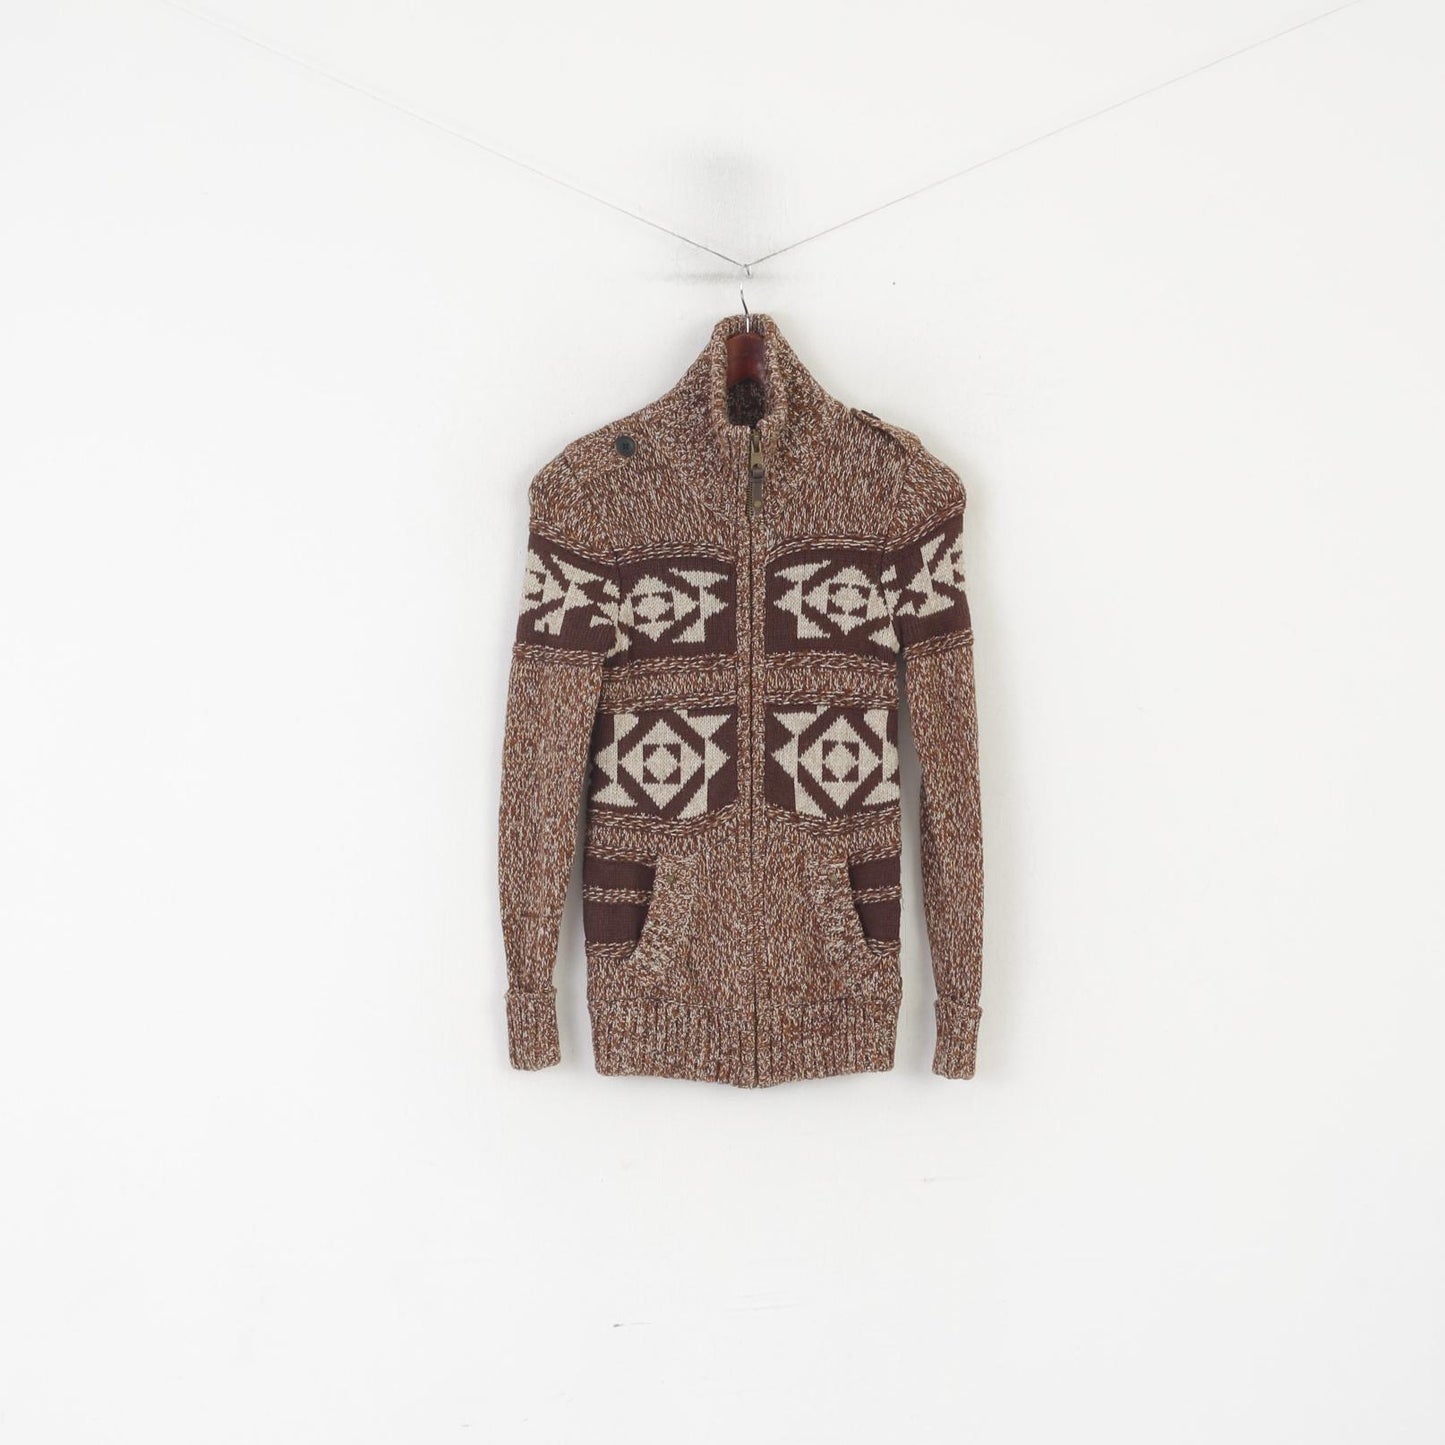 Groggy by jbc Women XS Cardigan Brown Cotton Aztec Full Zipper Fit Knit Sweater